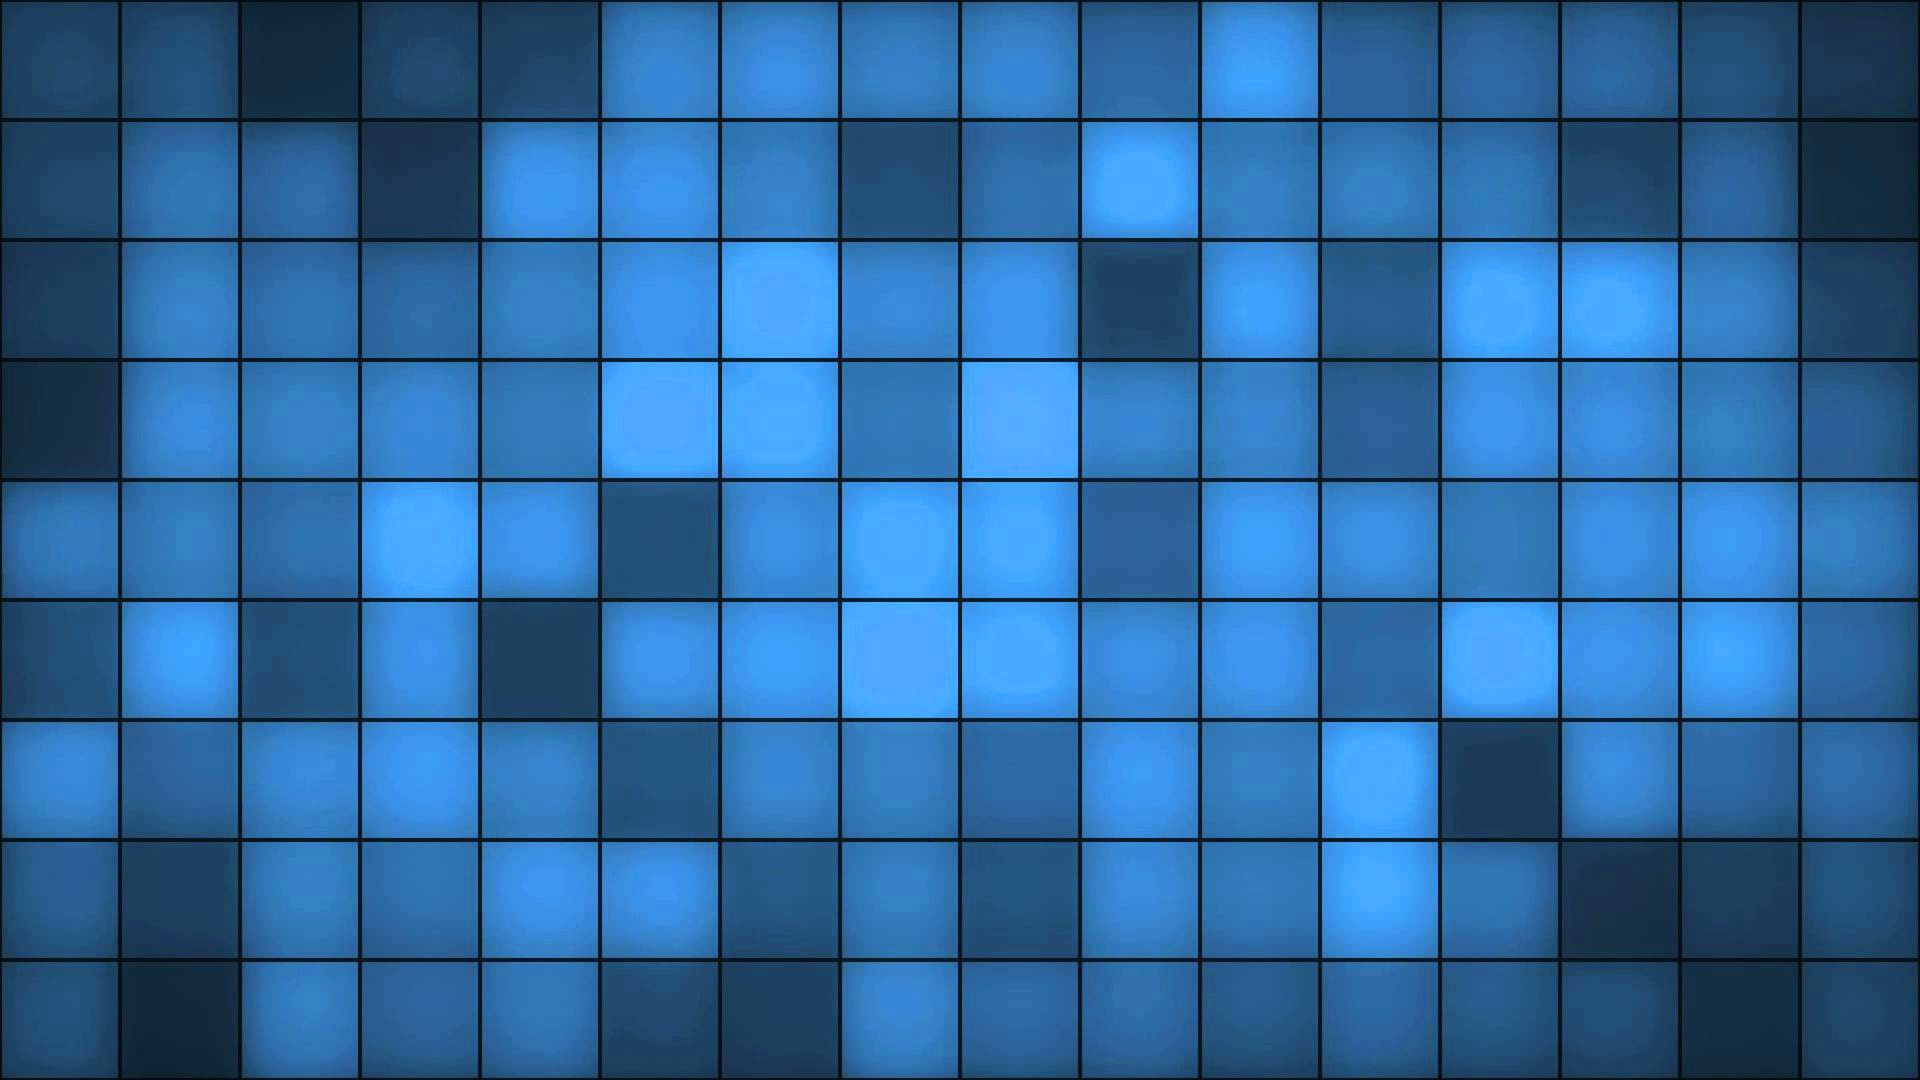 Artistic Blue Digital Art Pattern Square 1920x1080